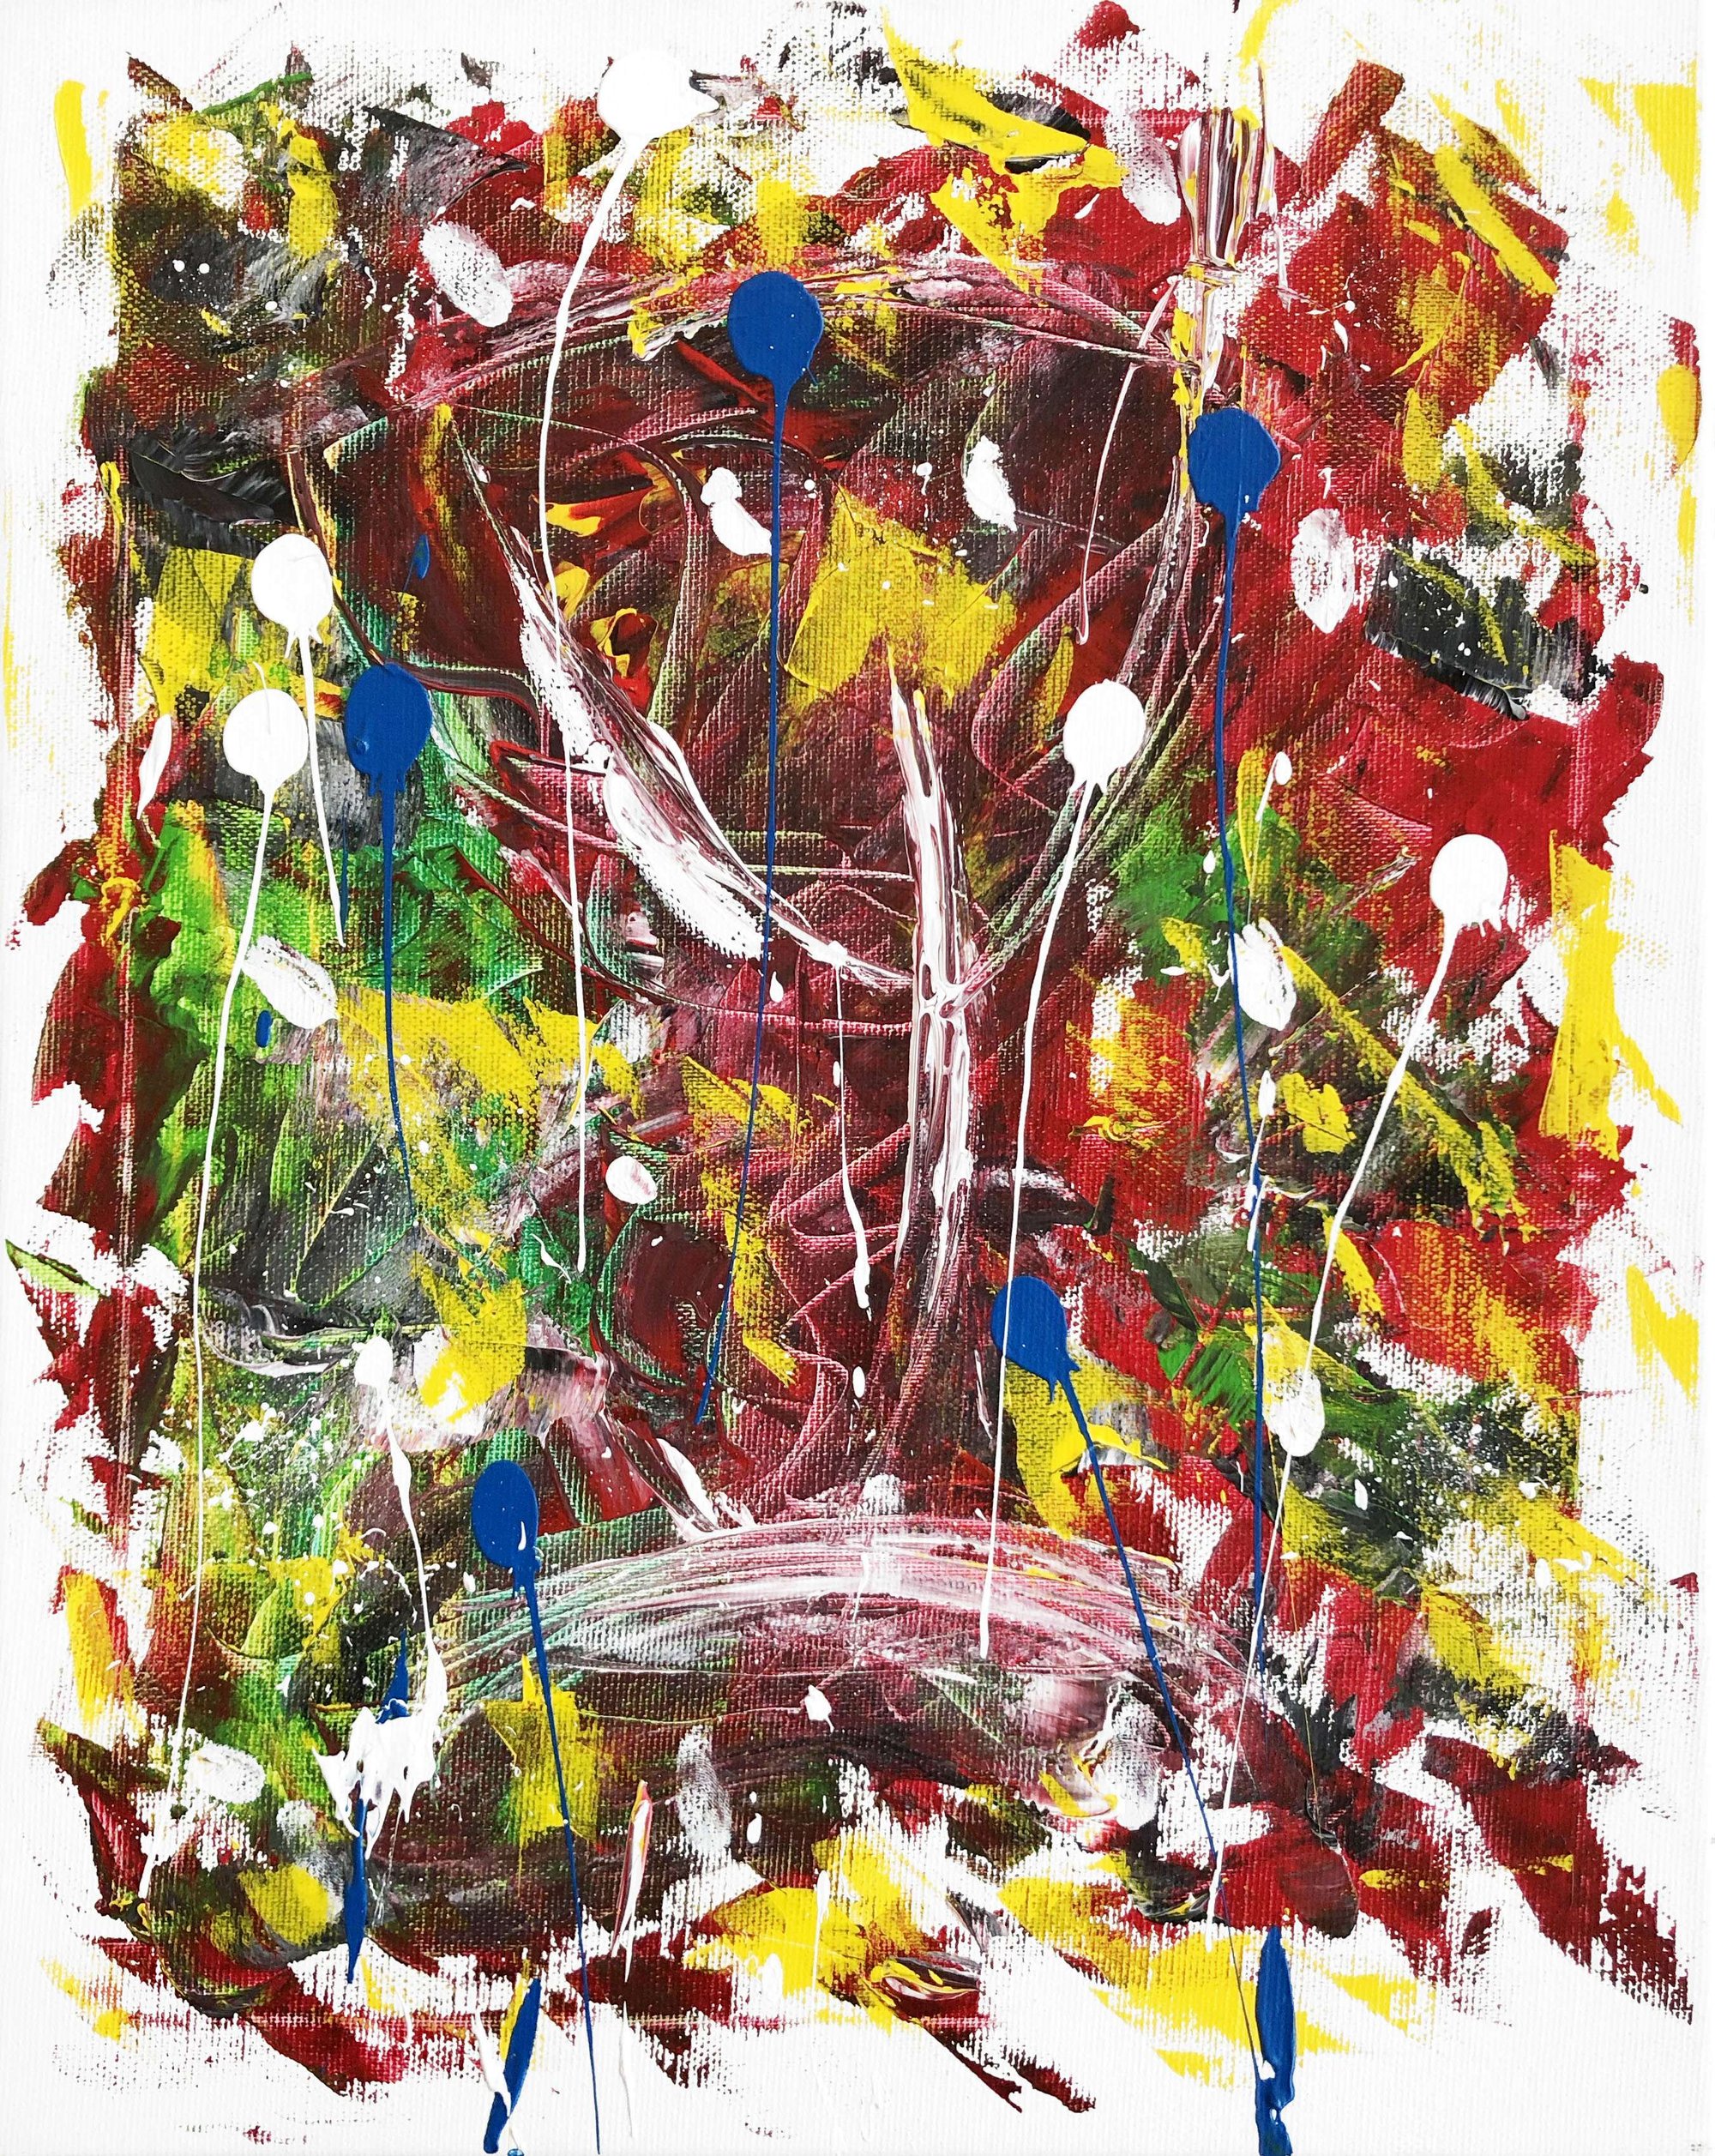 Miroslavo’s Paintings: Chaos